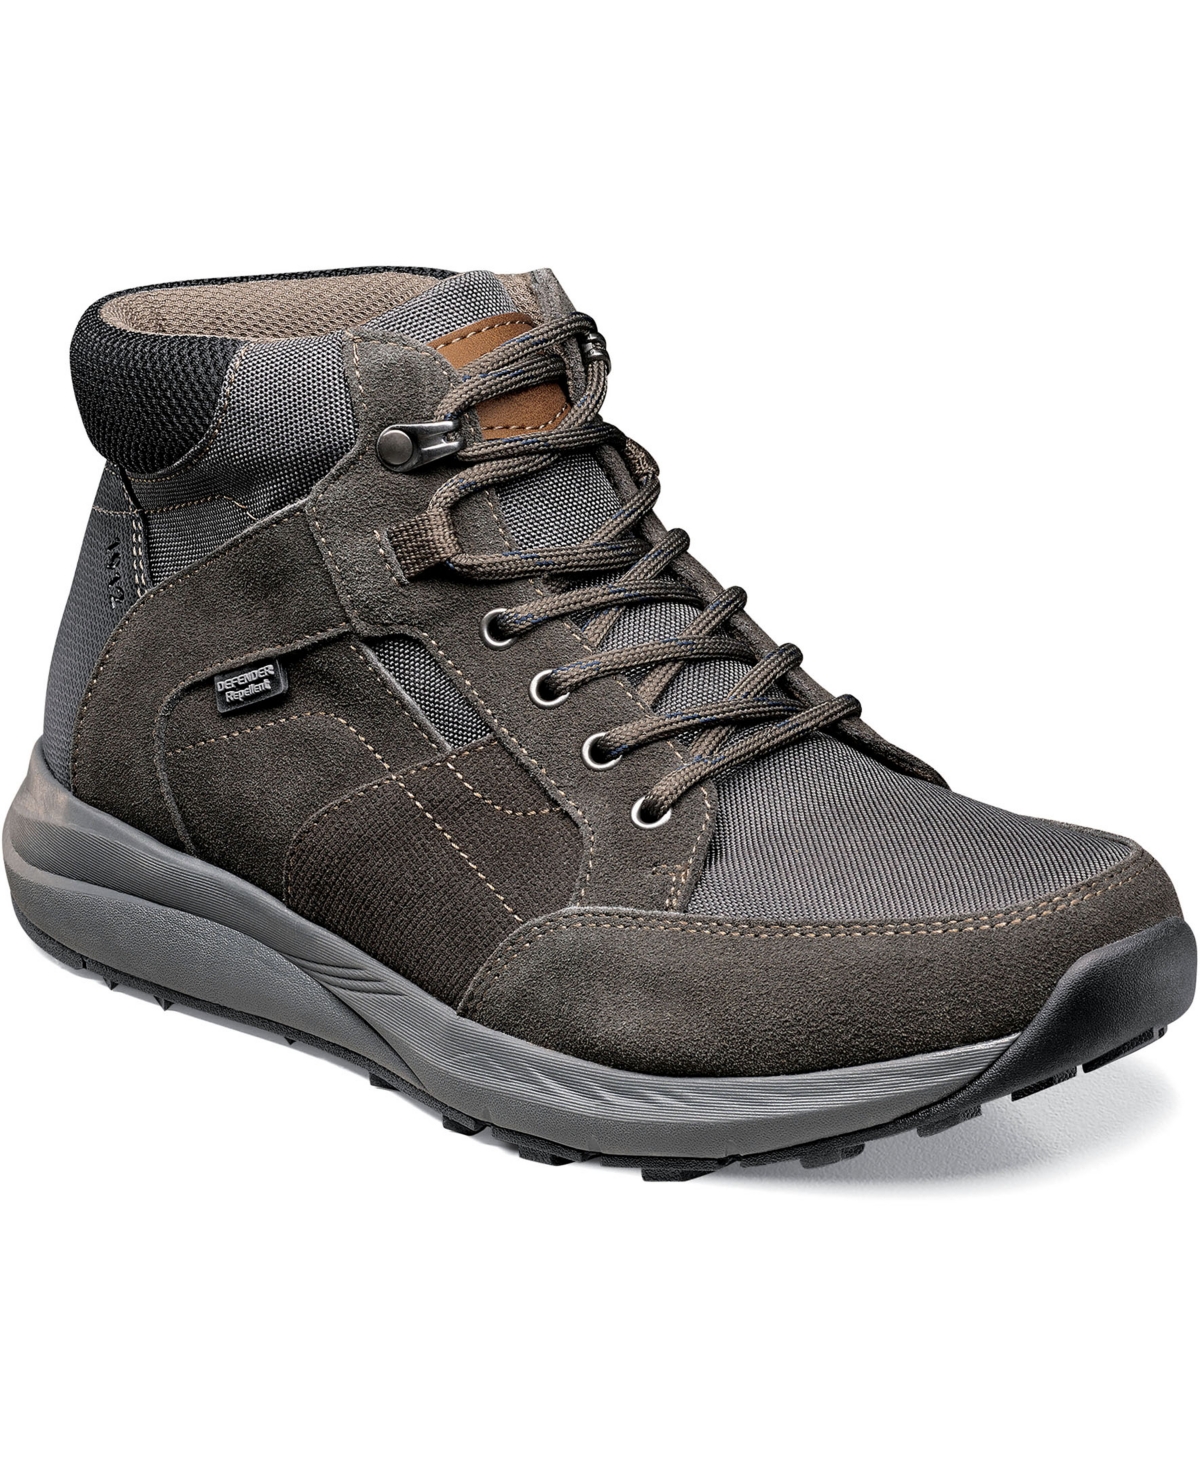 Men's Excursion Lite Moc Toe Chukka Boots - Dark Gray Multi